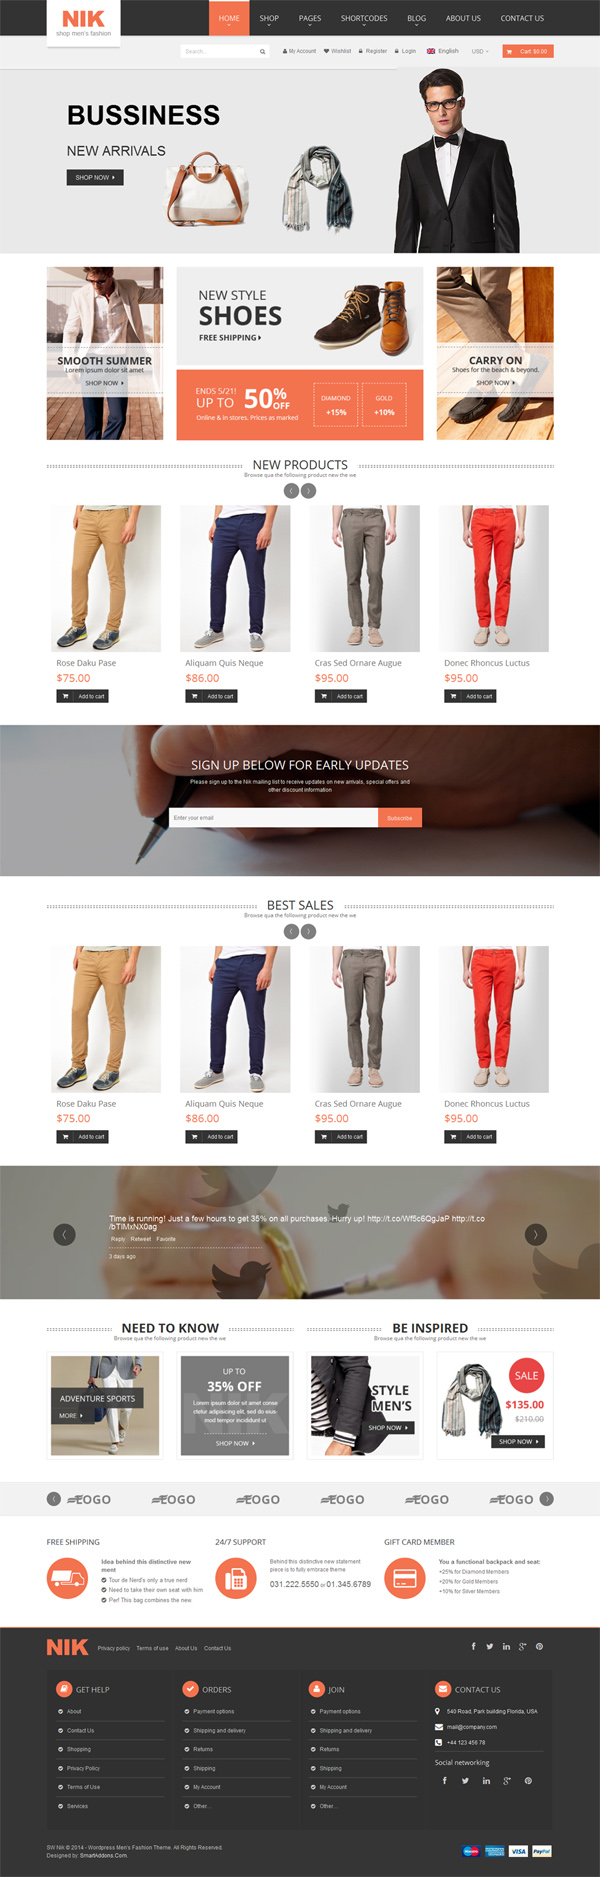 Nik - Responsive WordPress Theme for Fashion Store